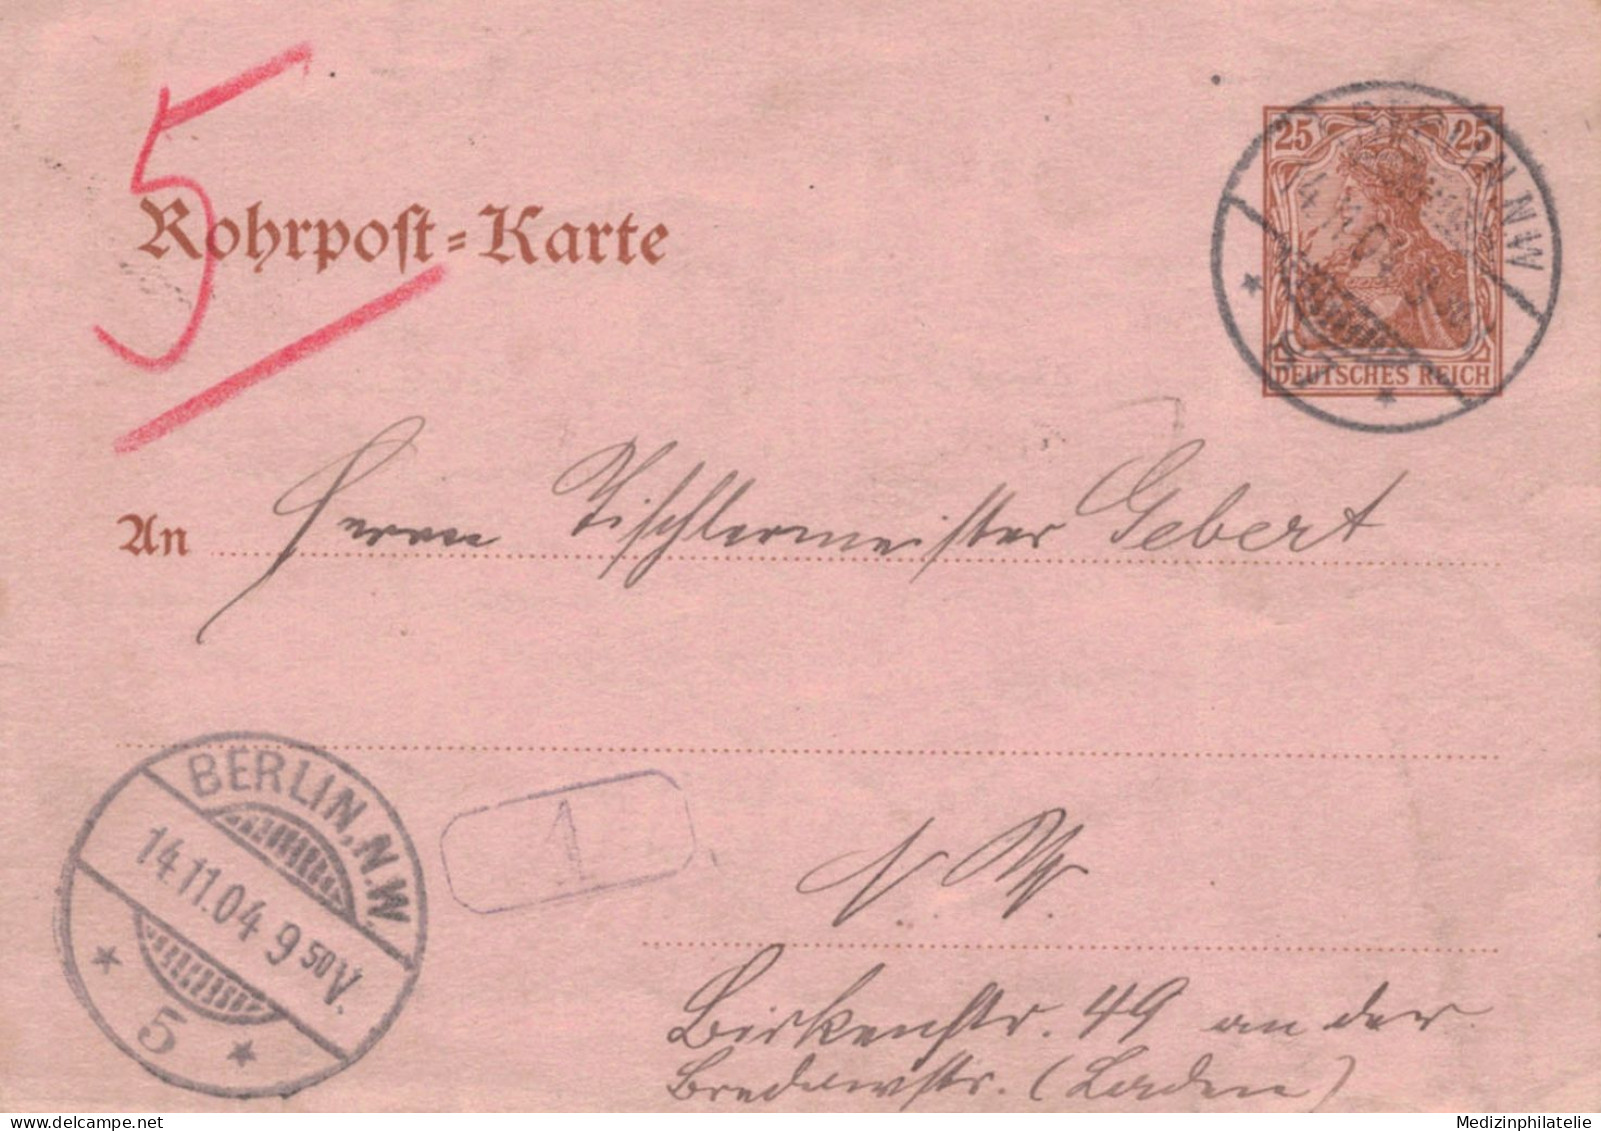 Rohrpost-Karte 25 Pf. Germania - Berlin 87 1904 > 5 09:50 - Postcards